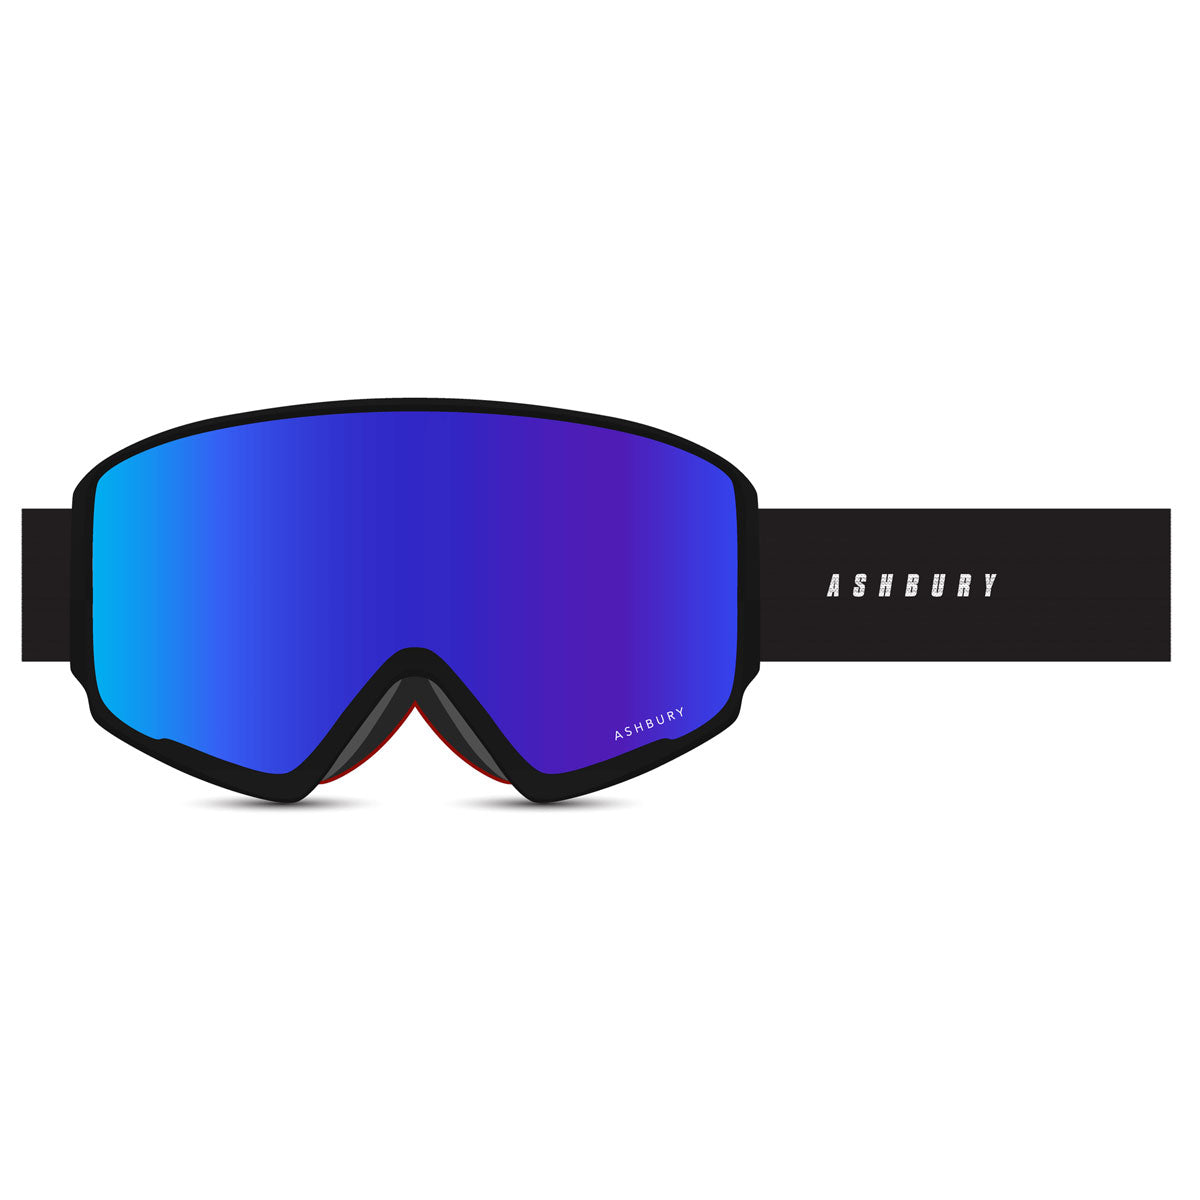 Ashbury Arrow Callsign Snowboard Goggles - Blue Mirror/Yellow Spare image 1